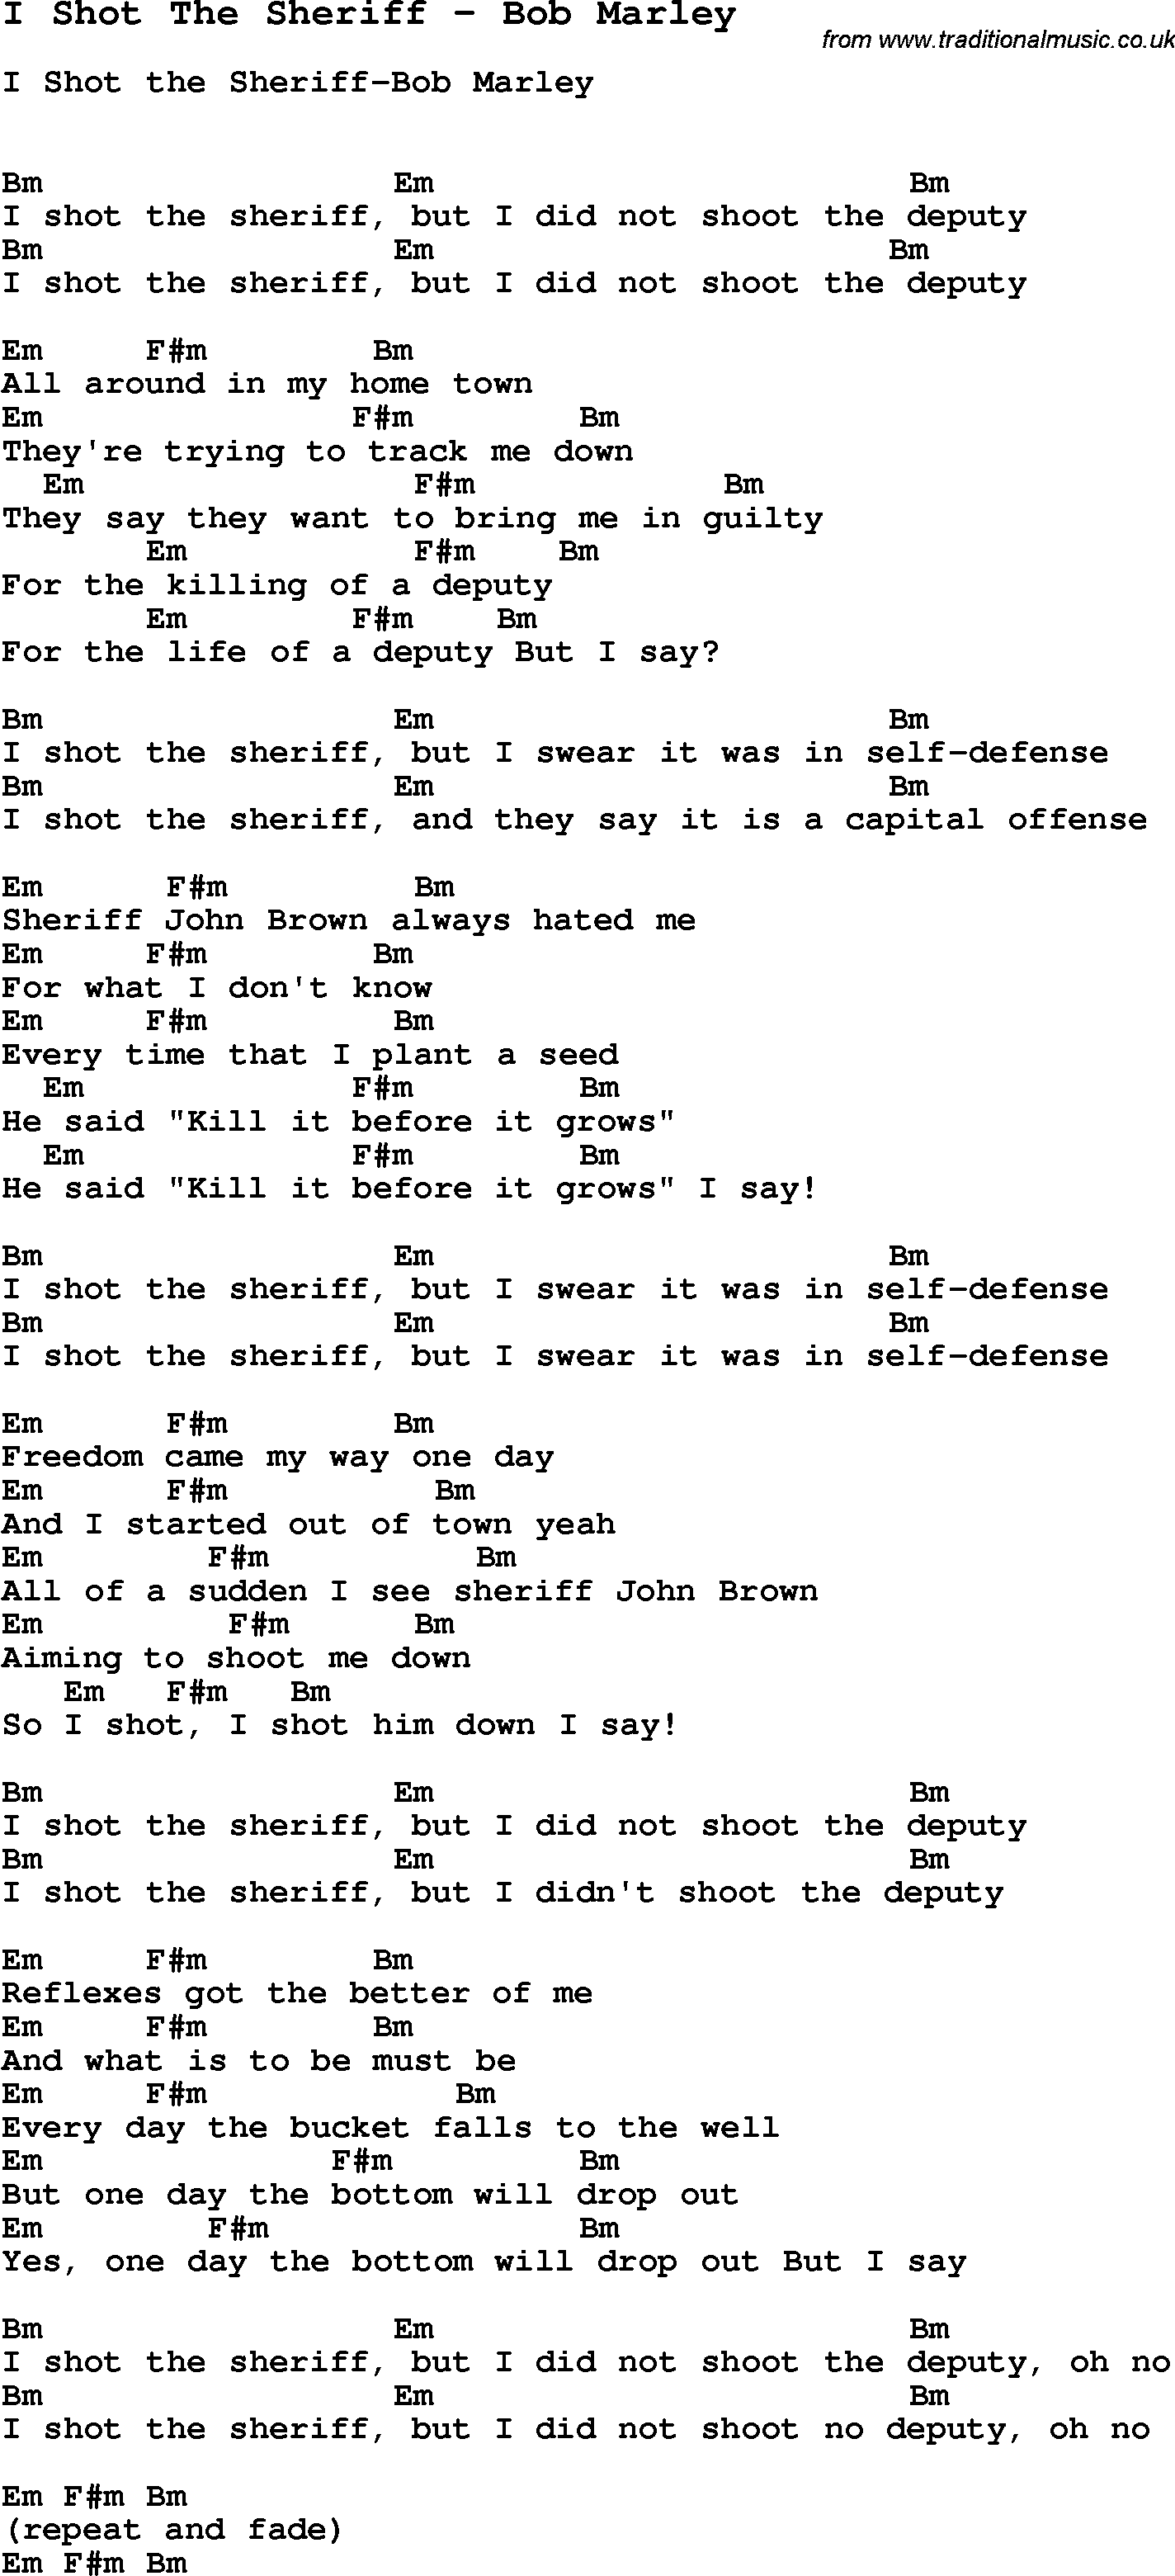 Song I Shot The Sheriff by Bob Marley, with lyrics for vocal performance and accompaniment chords for Ukulele, Guitar Banjo etc.